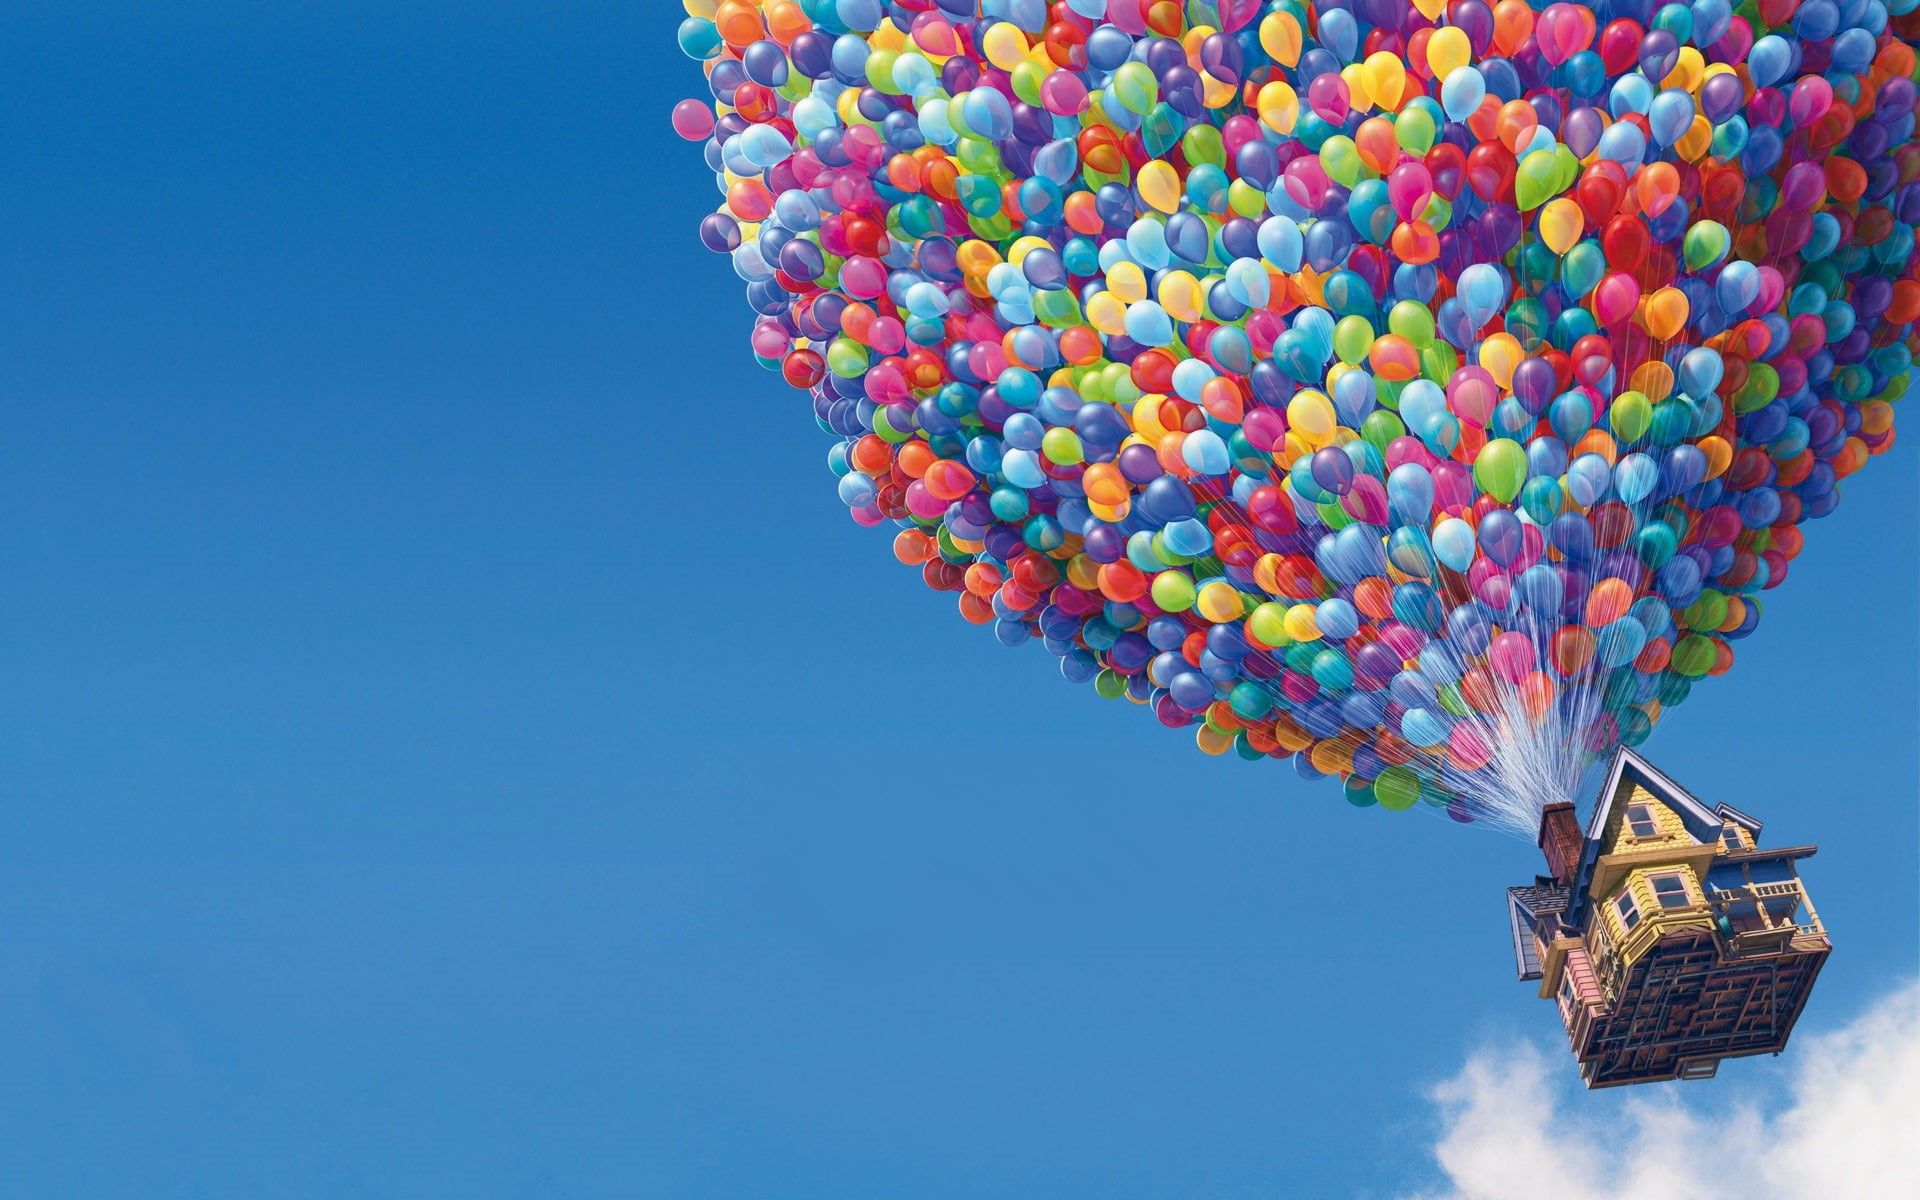 Wallpaper / x, art, entertainment, movie, Up (movie), hd, movies, balloons, 1080P, Pixar free download